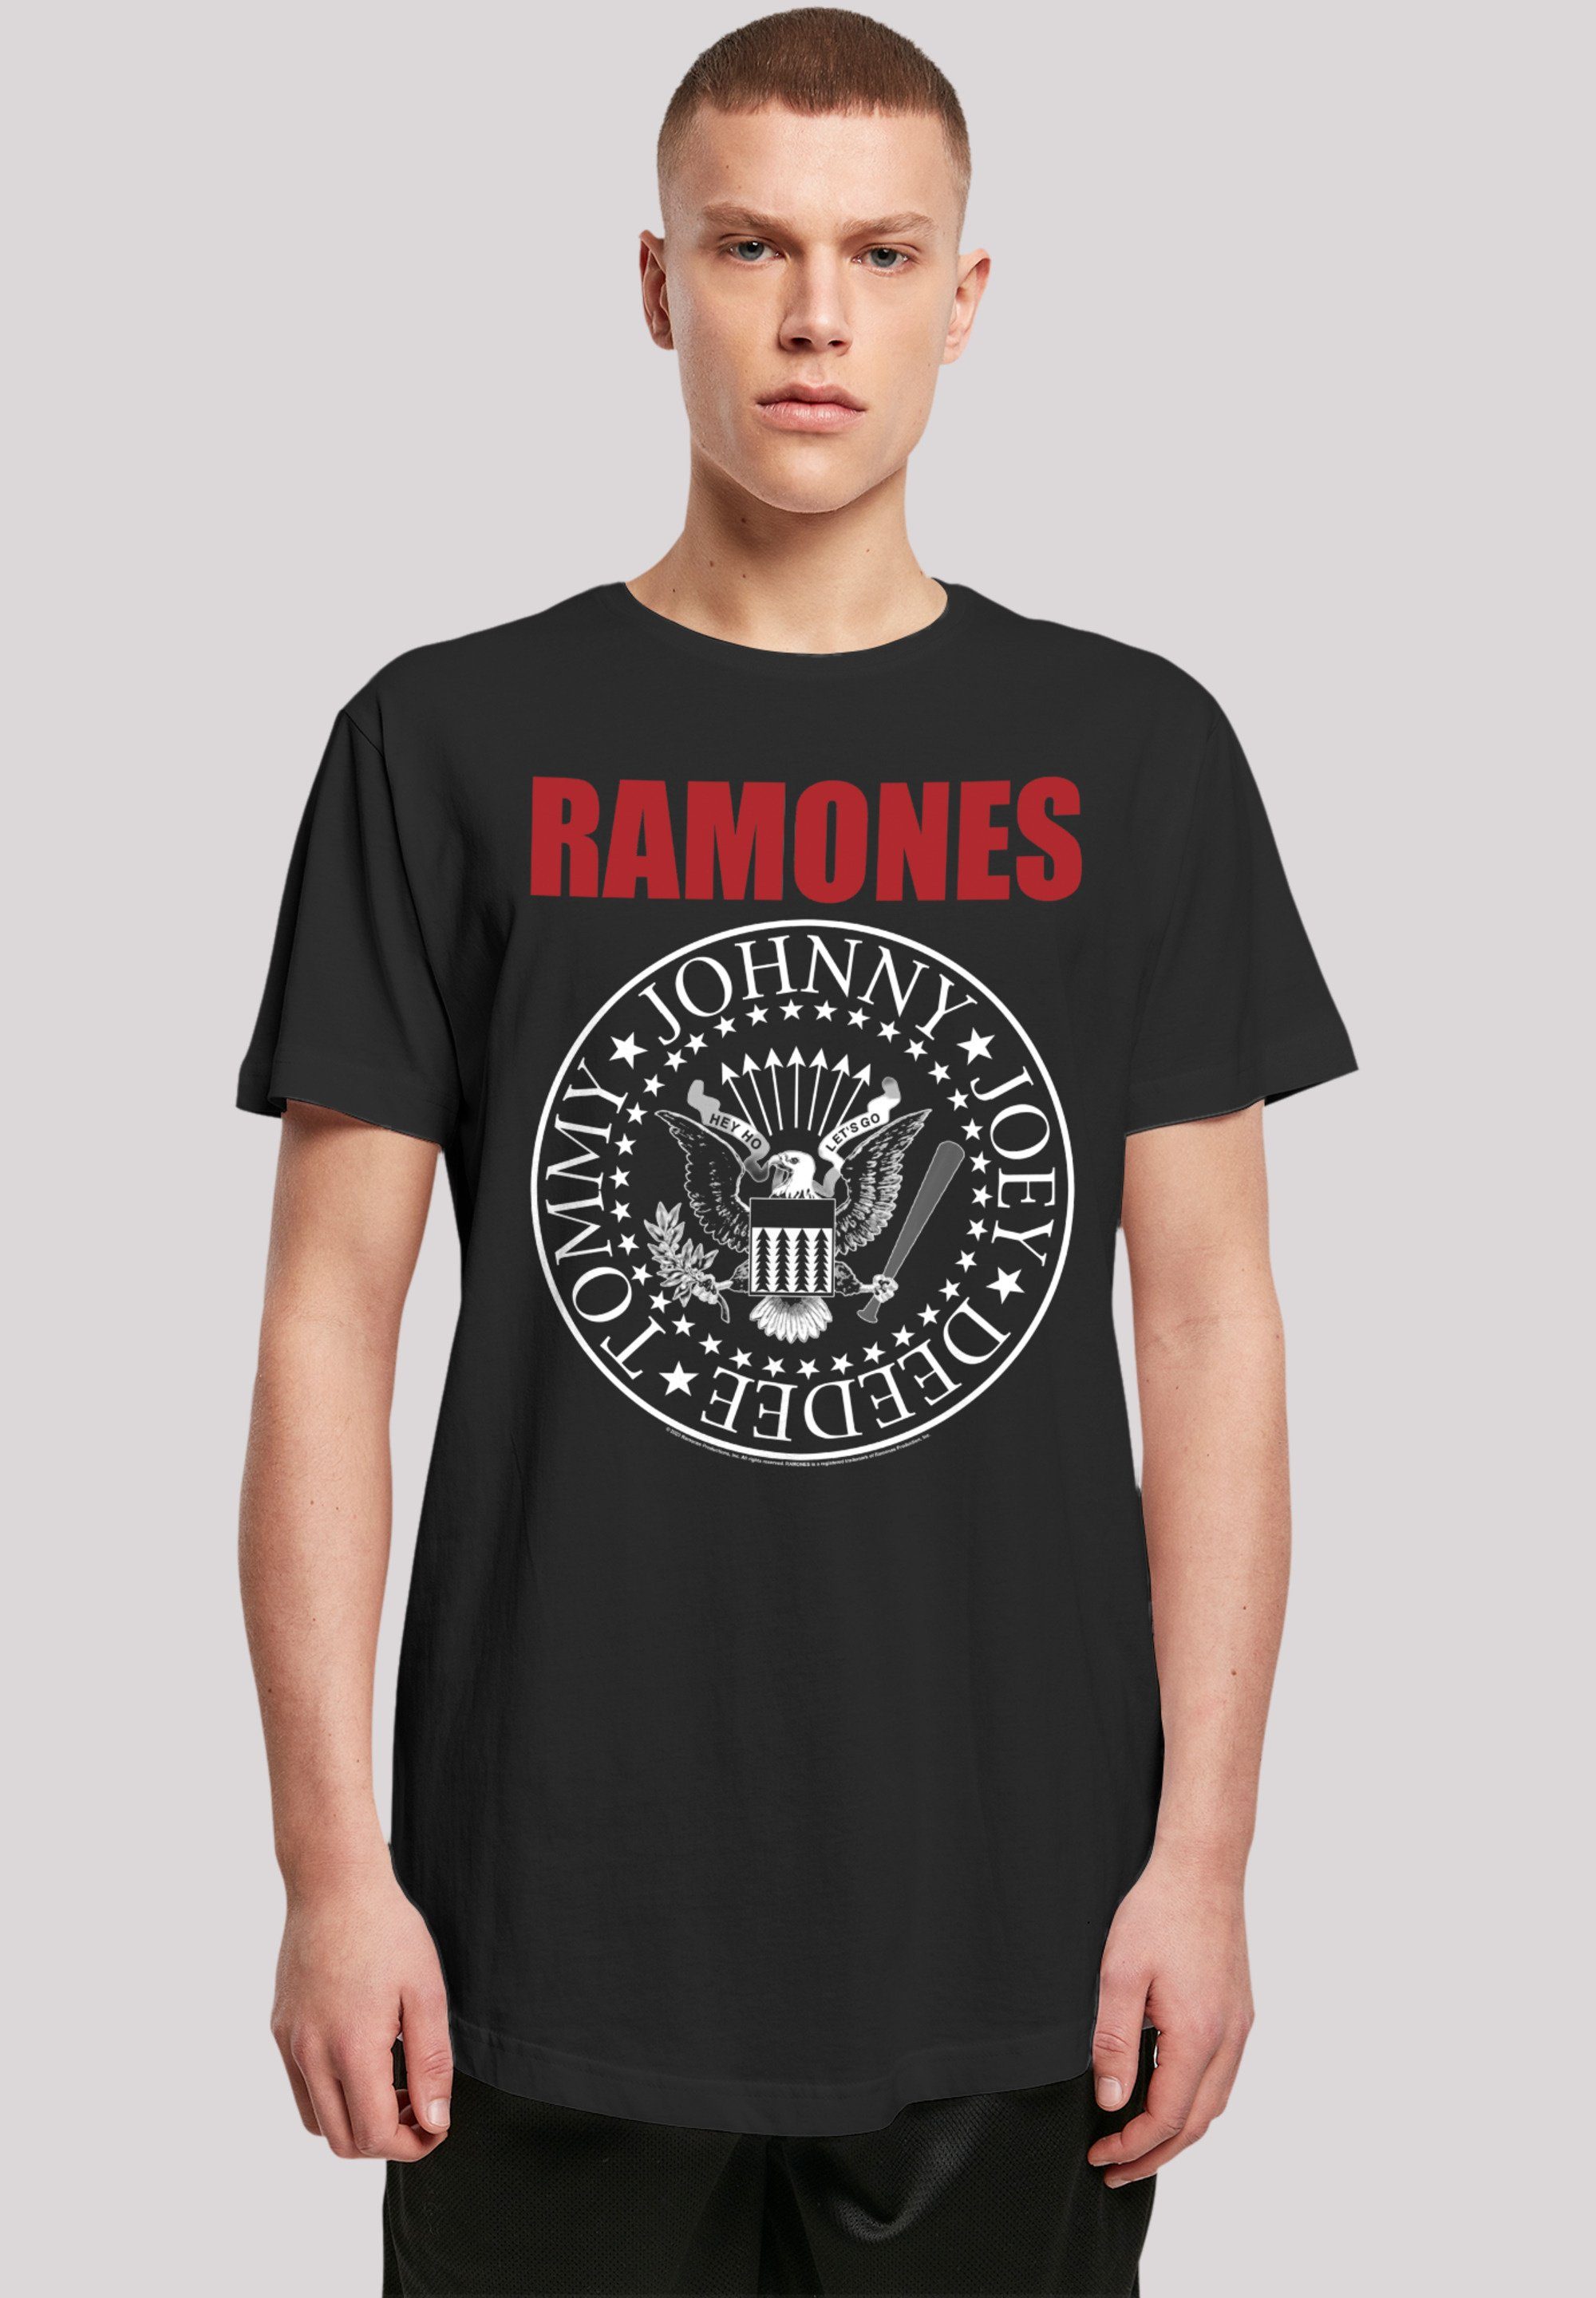 F4NT4STIC T-Shirt Ramones Rock Seal Band, Musik Premium Band Red Rock-Musik Text Qualität